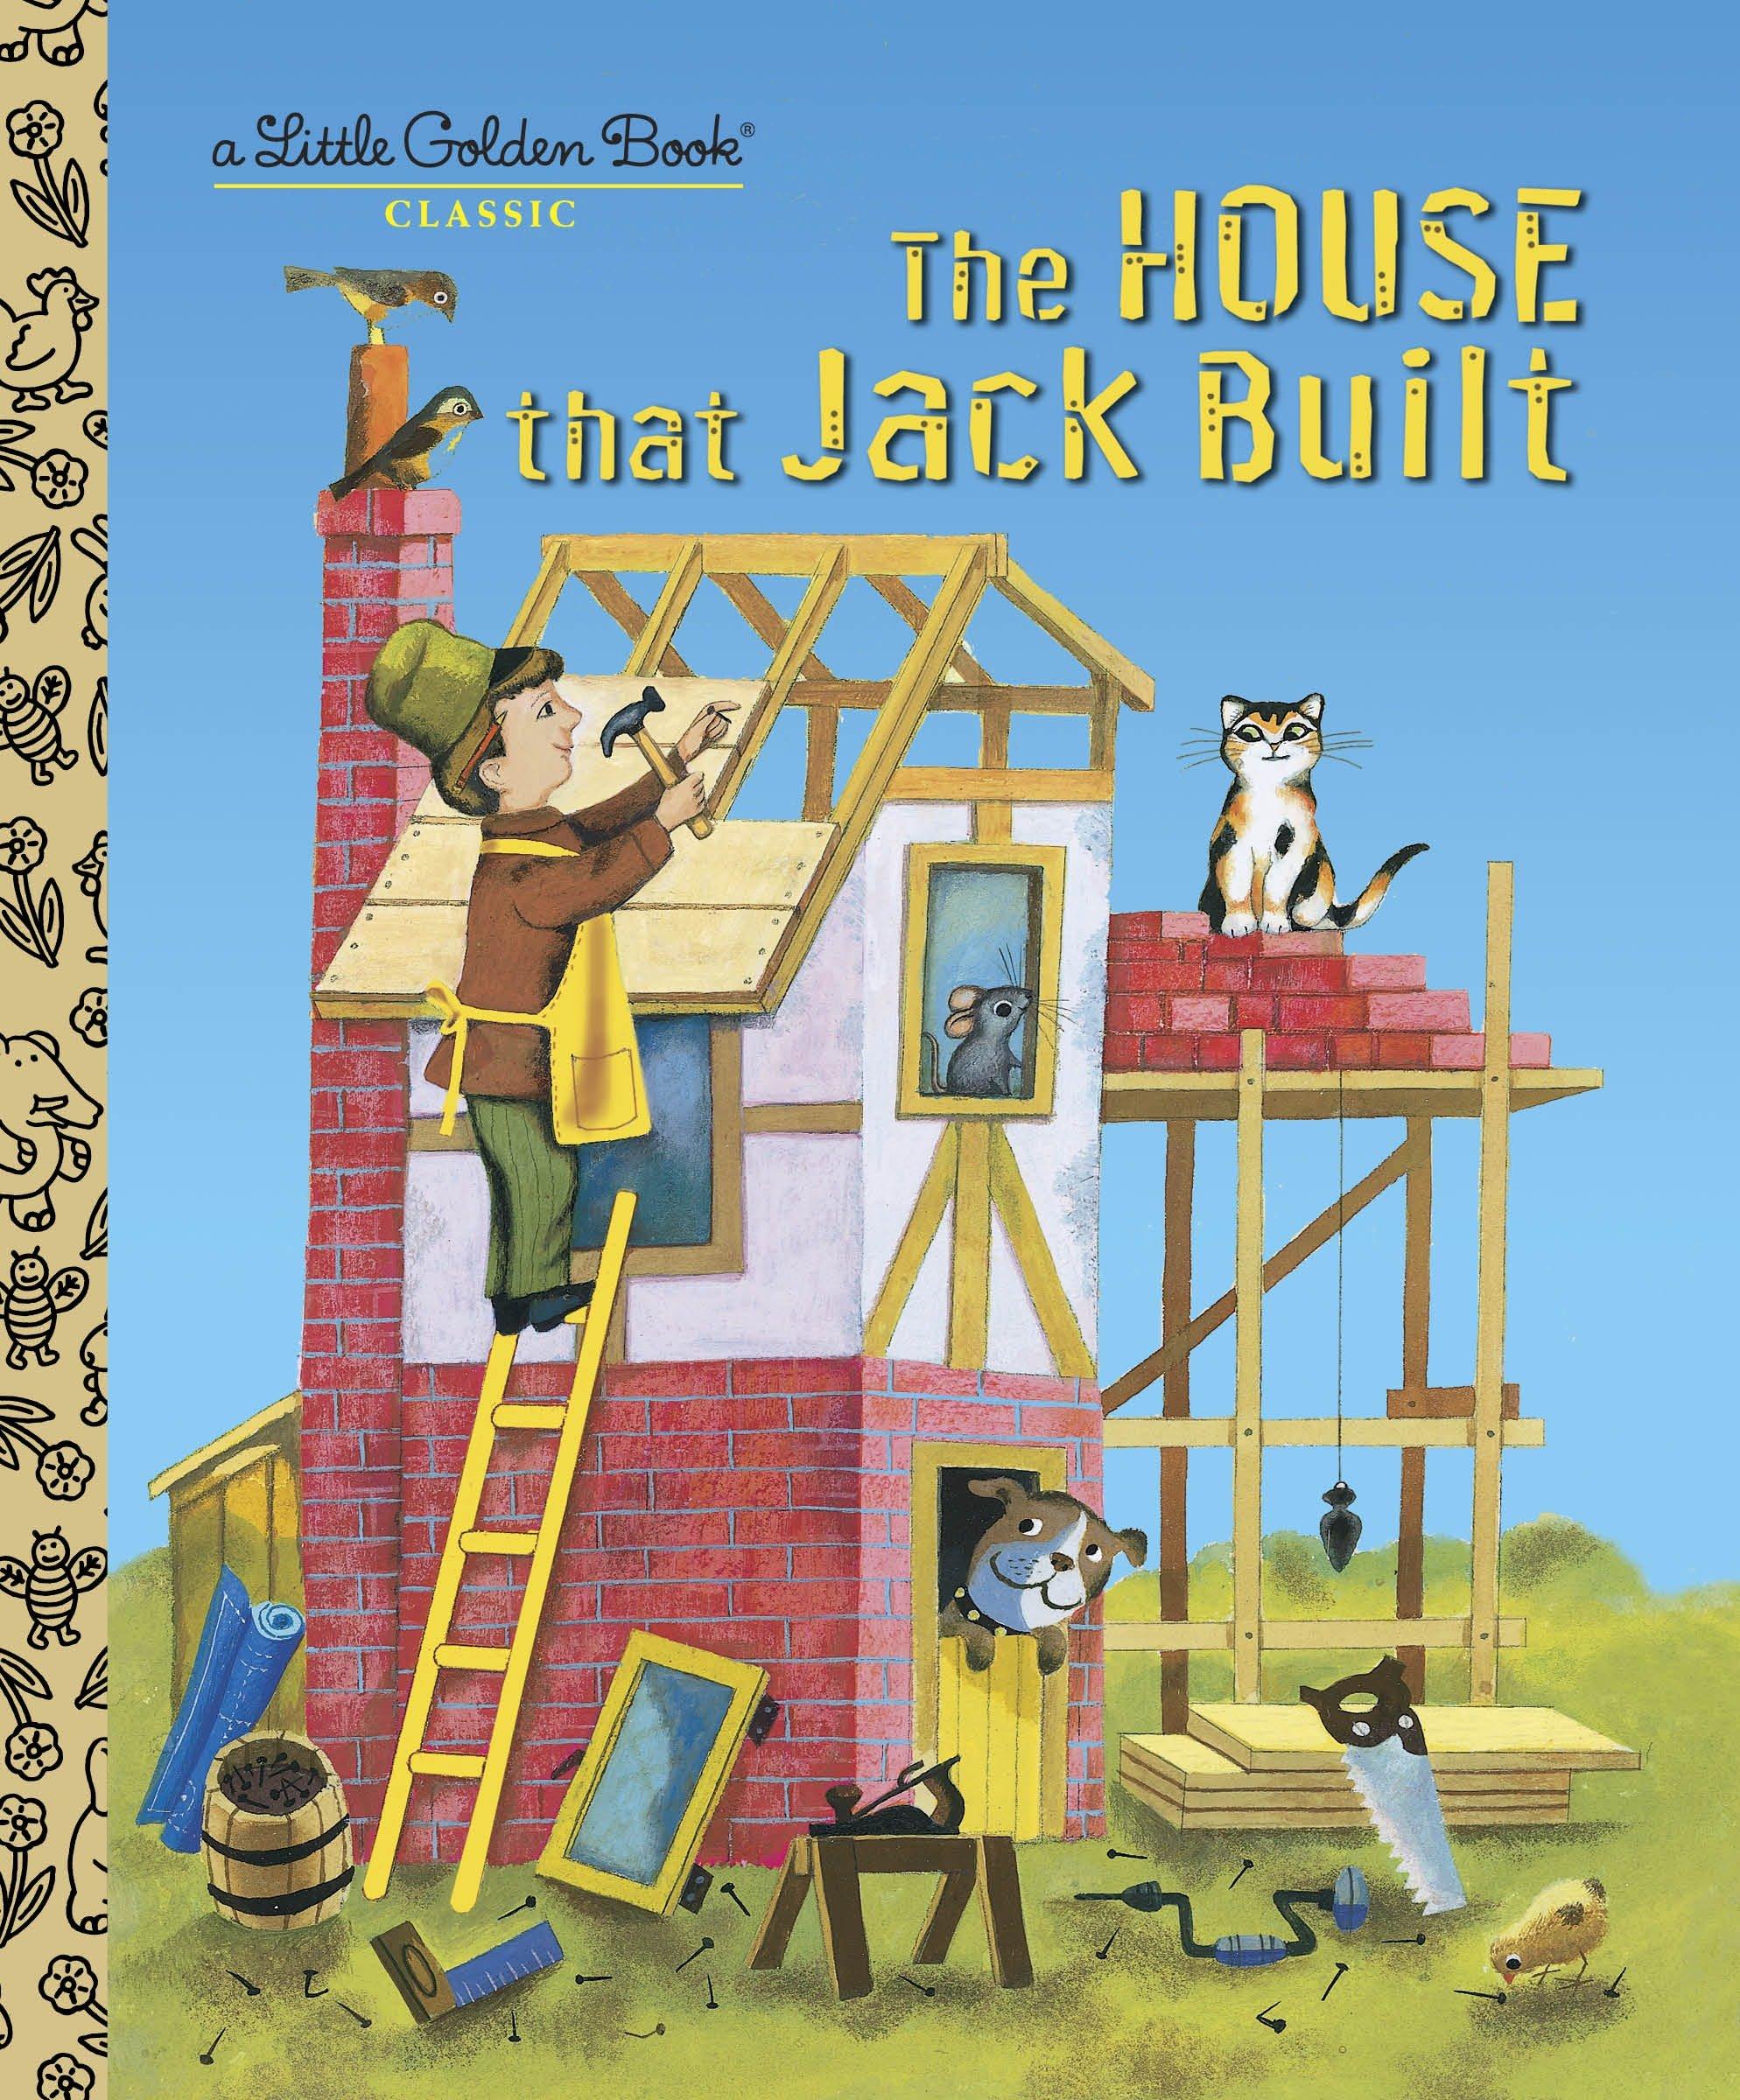 The House that Jack Built - Golden Books